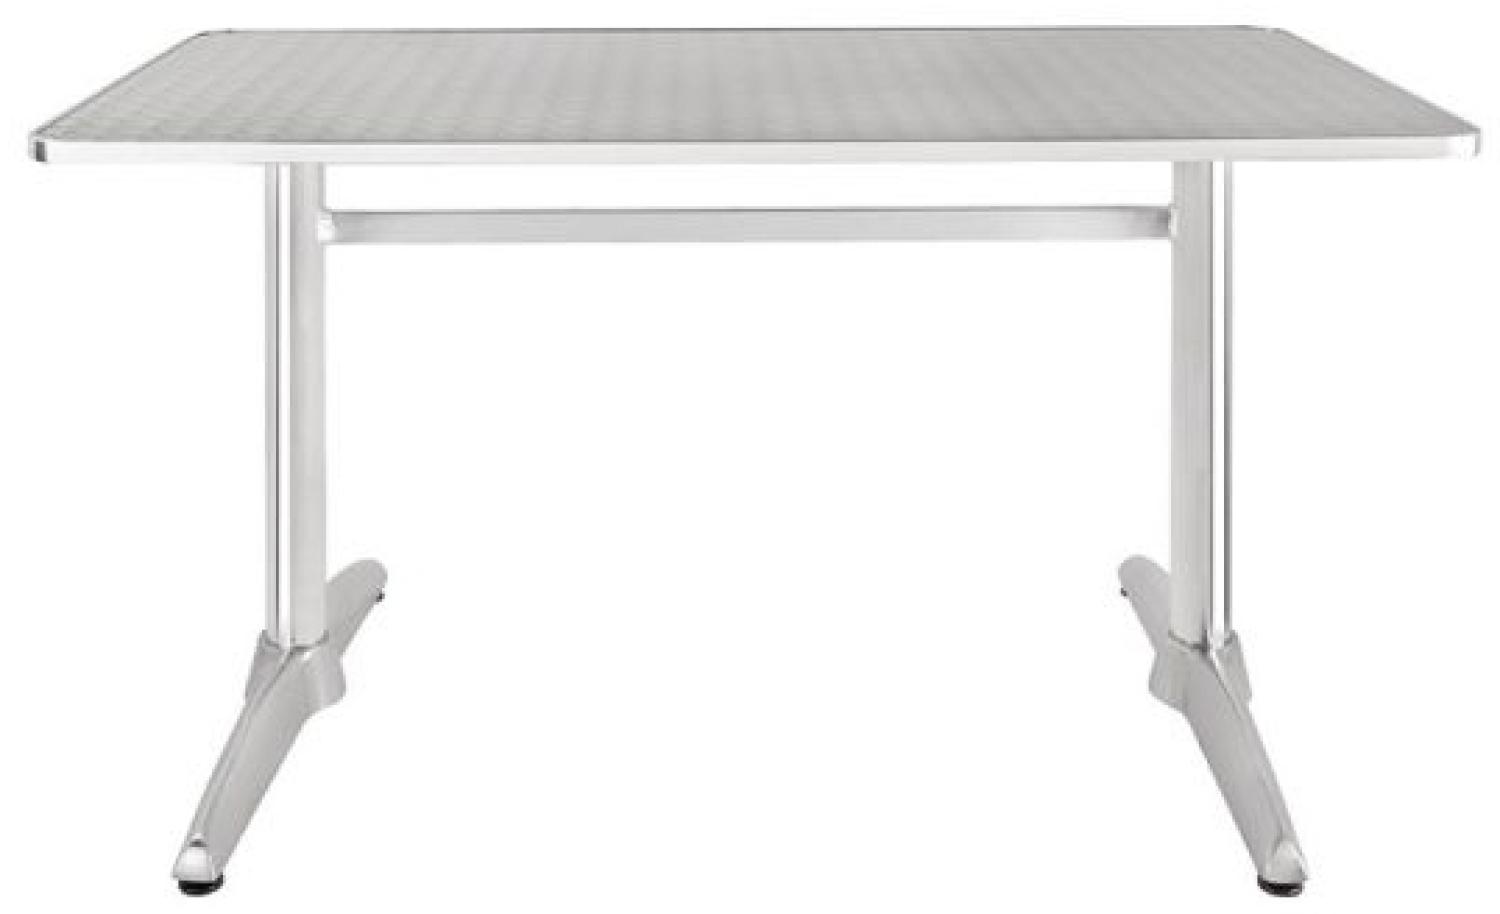 Bolero rechteckiger Tisch Edelstahl, 120 x 60cm Bild 1